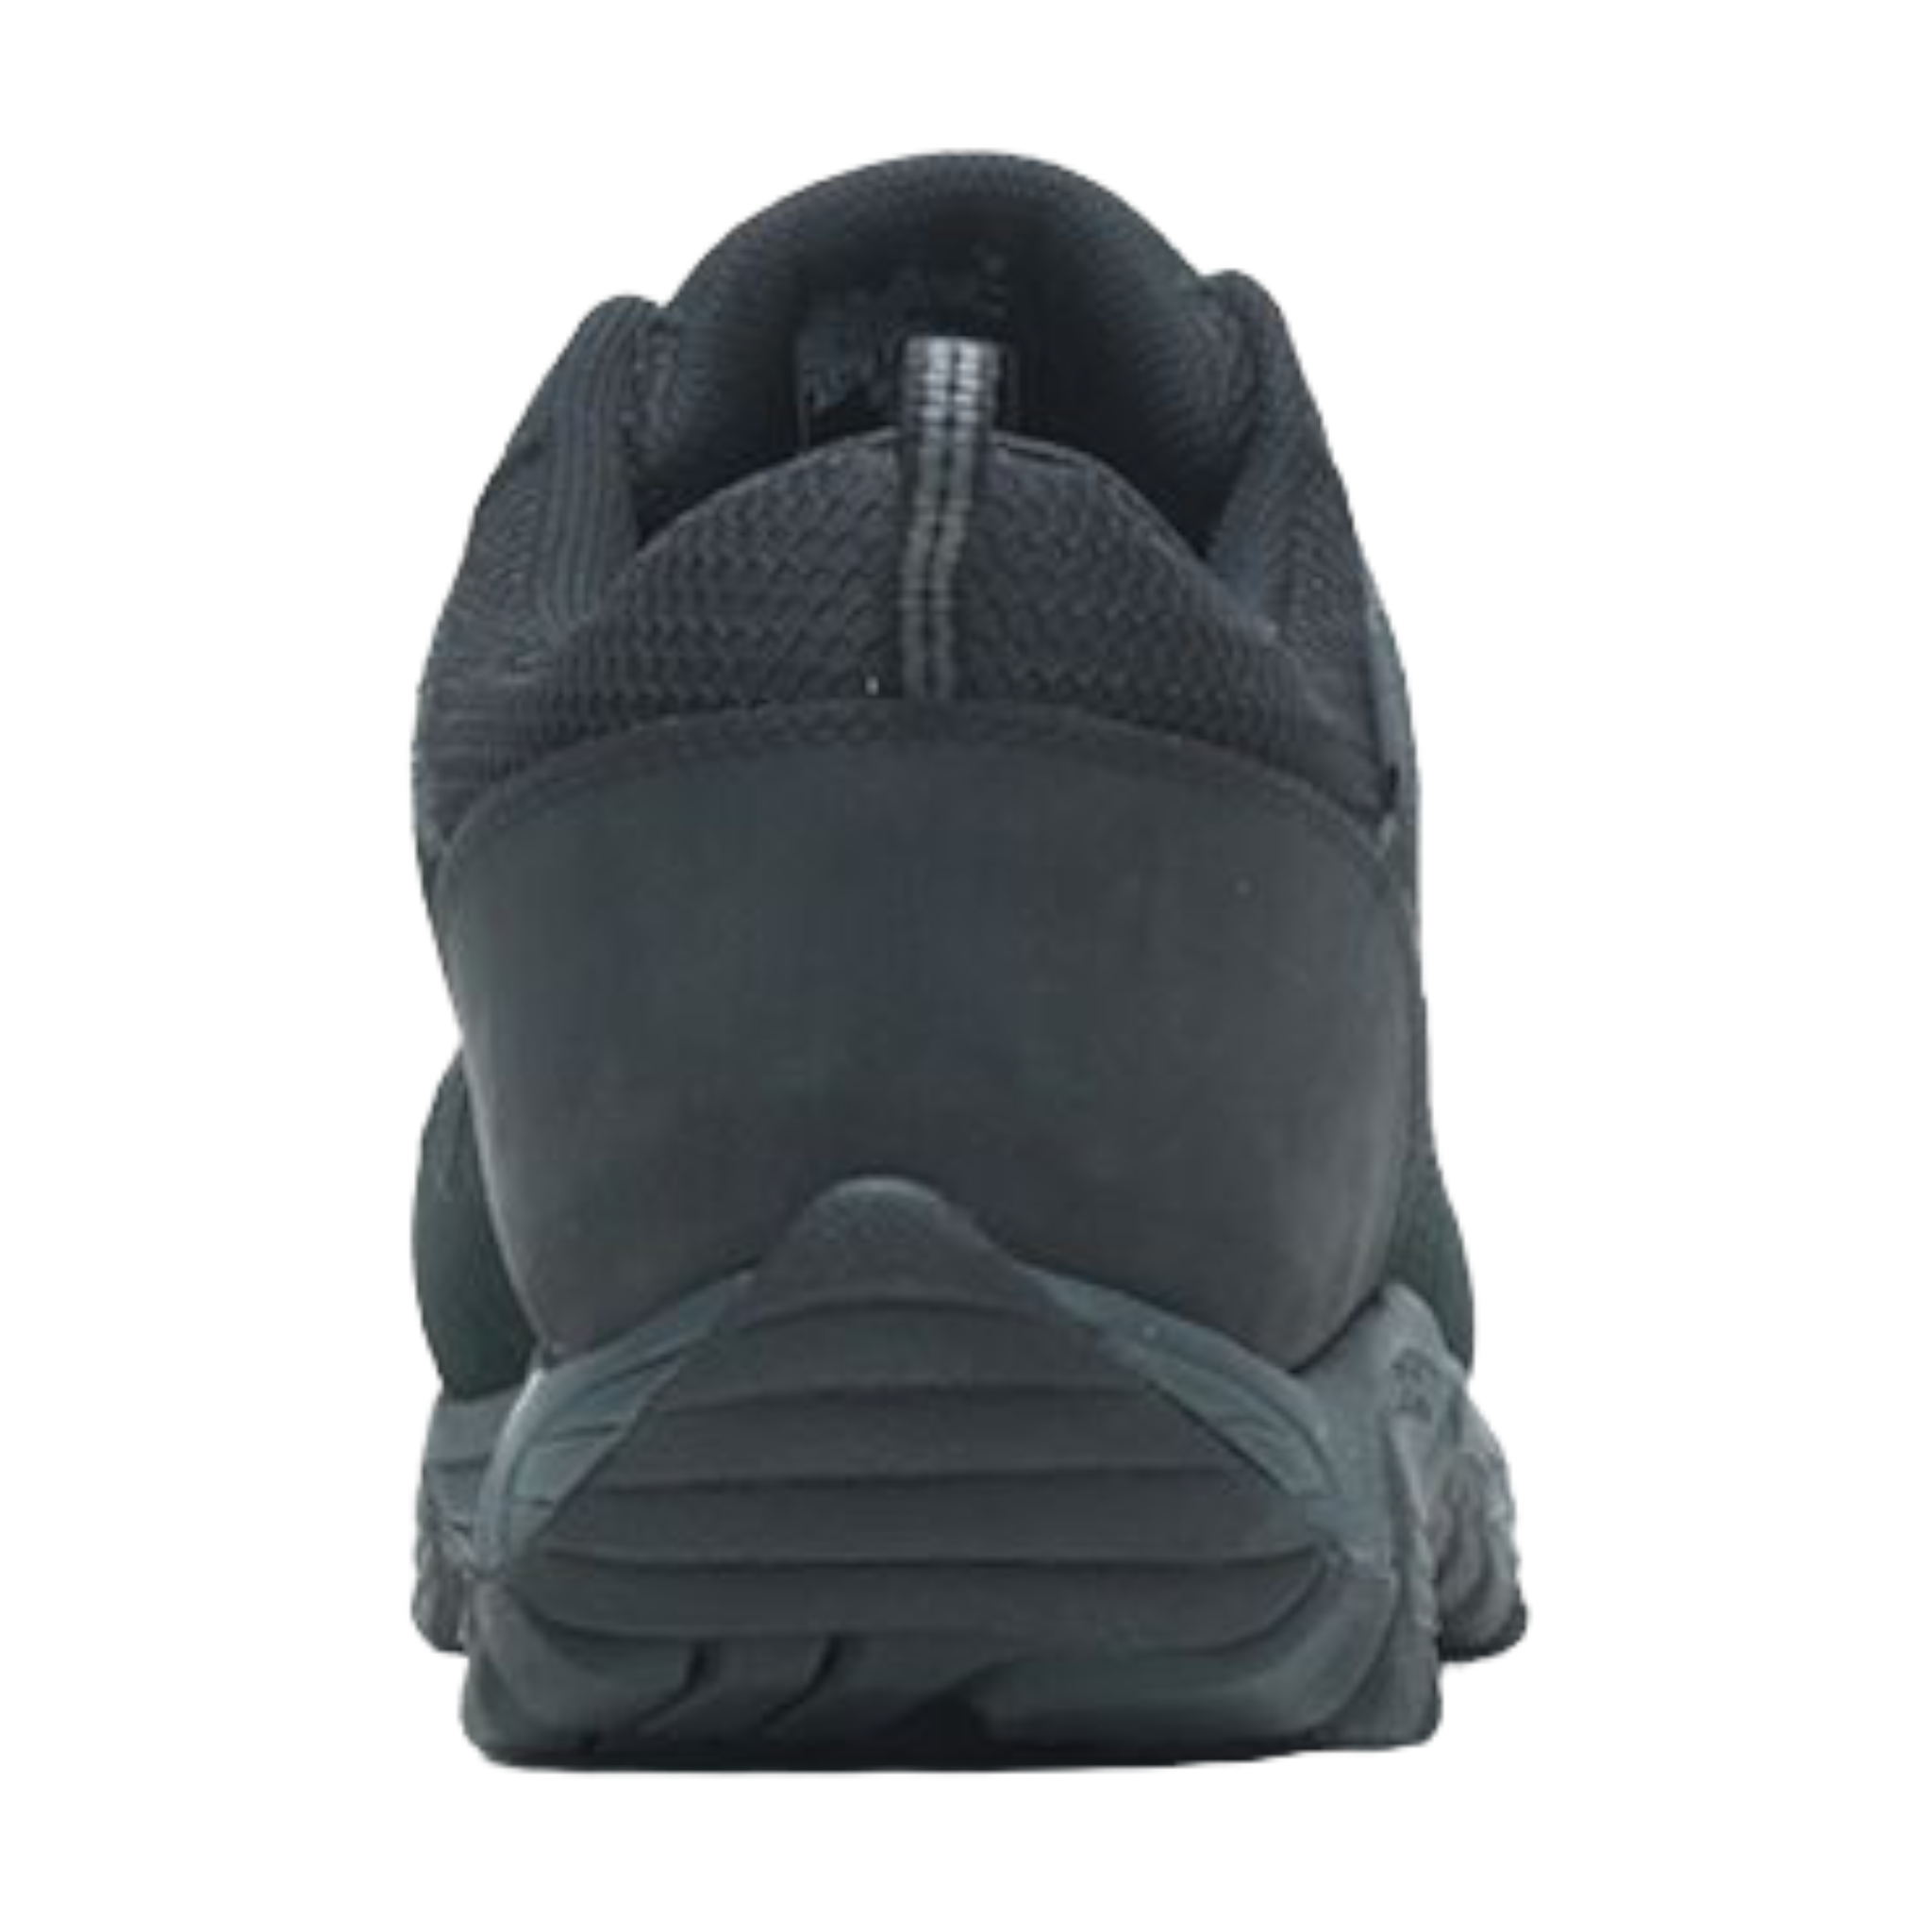 Men's Moab Onset Waterproof Comp Toe Work Shoe - Dardano's Shoes